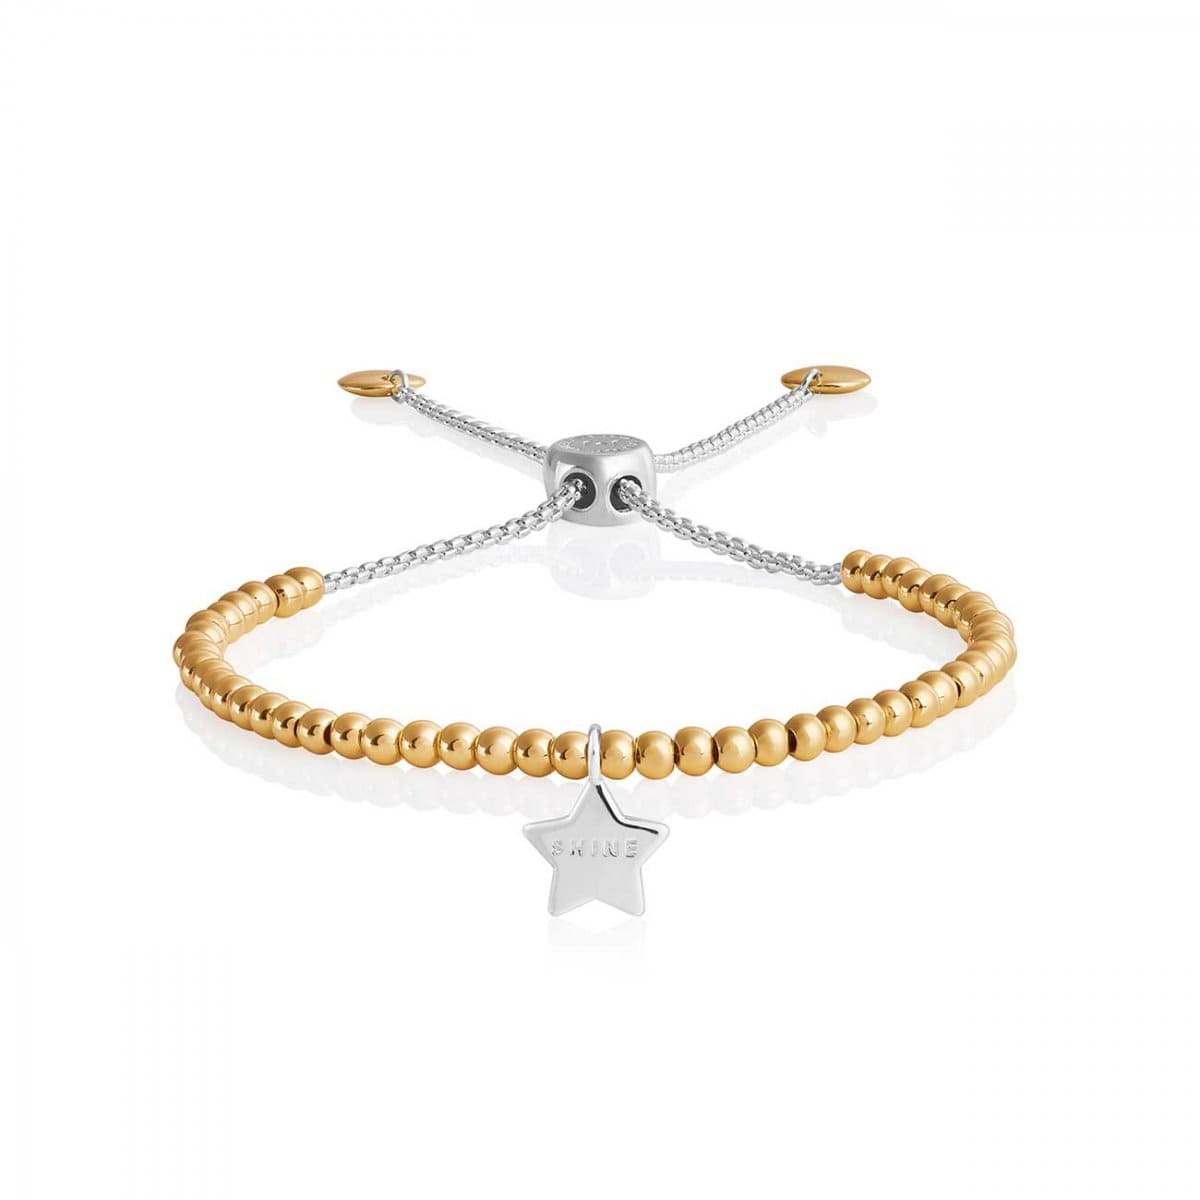 Joma Jewellery Friendship Bracelet Gift Set, Silver at John Lewis & Partners